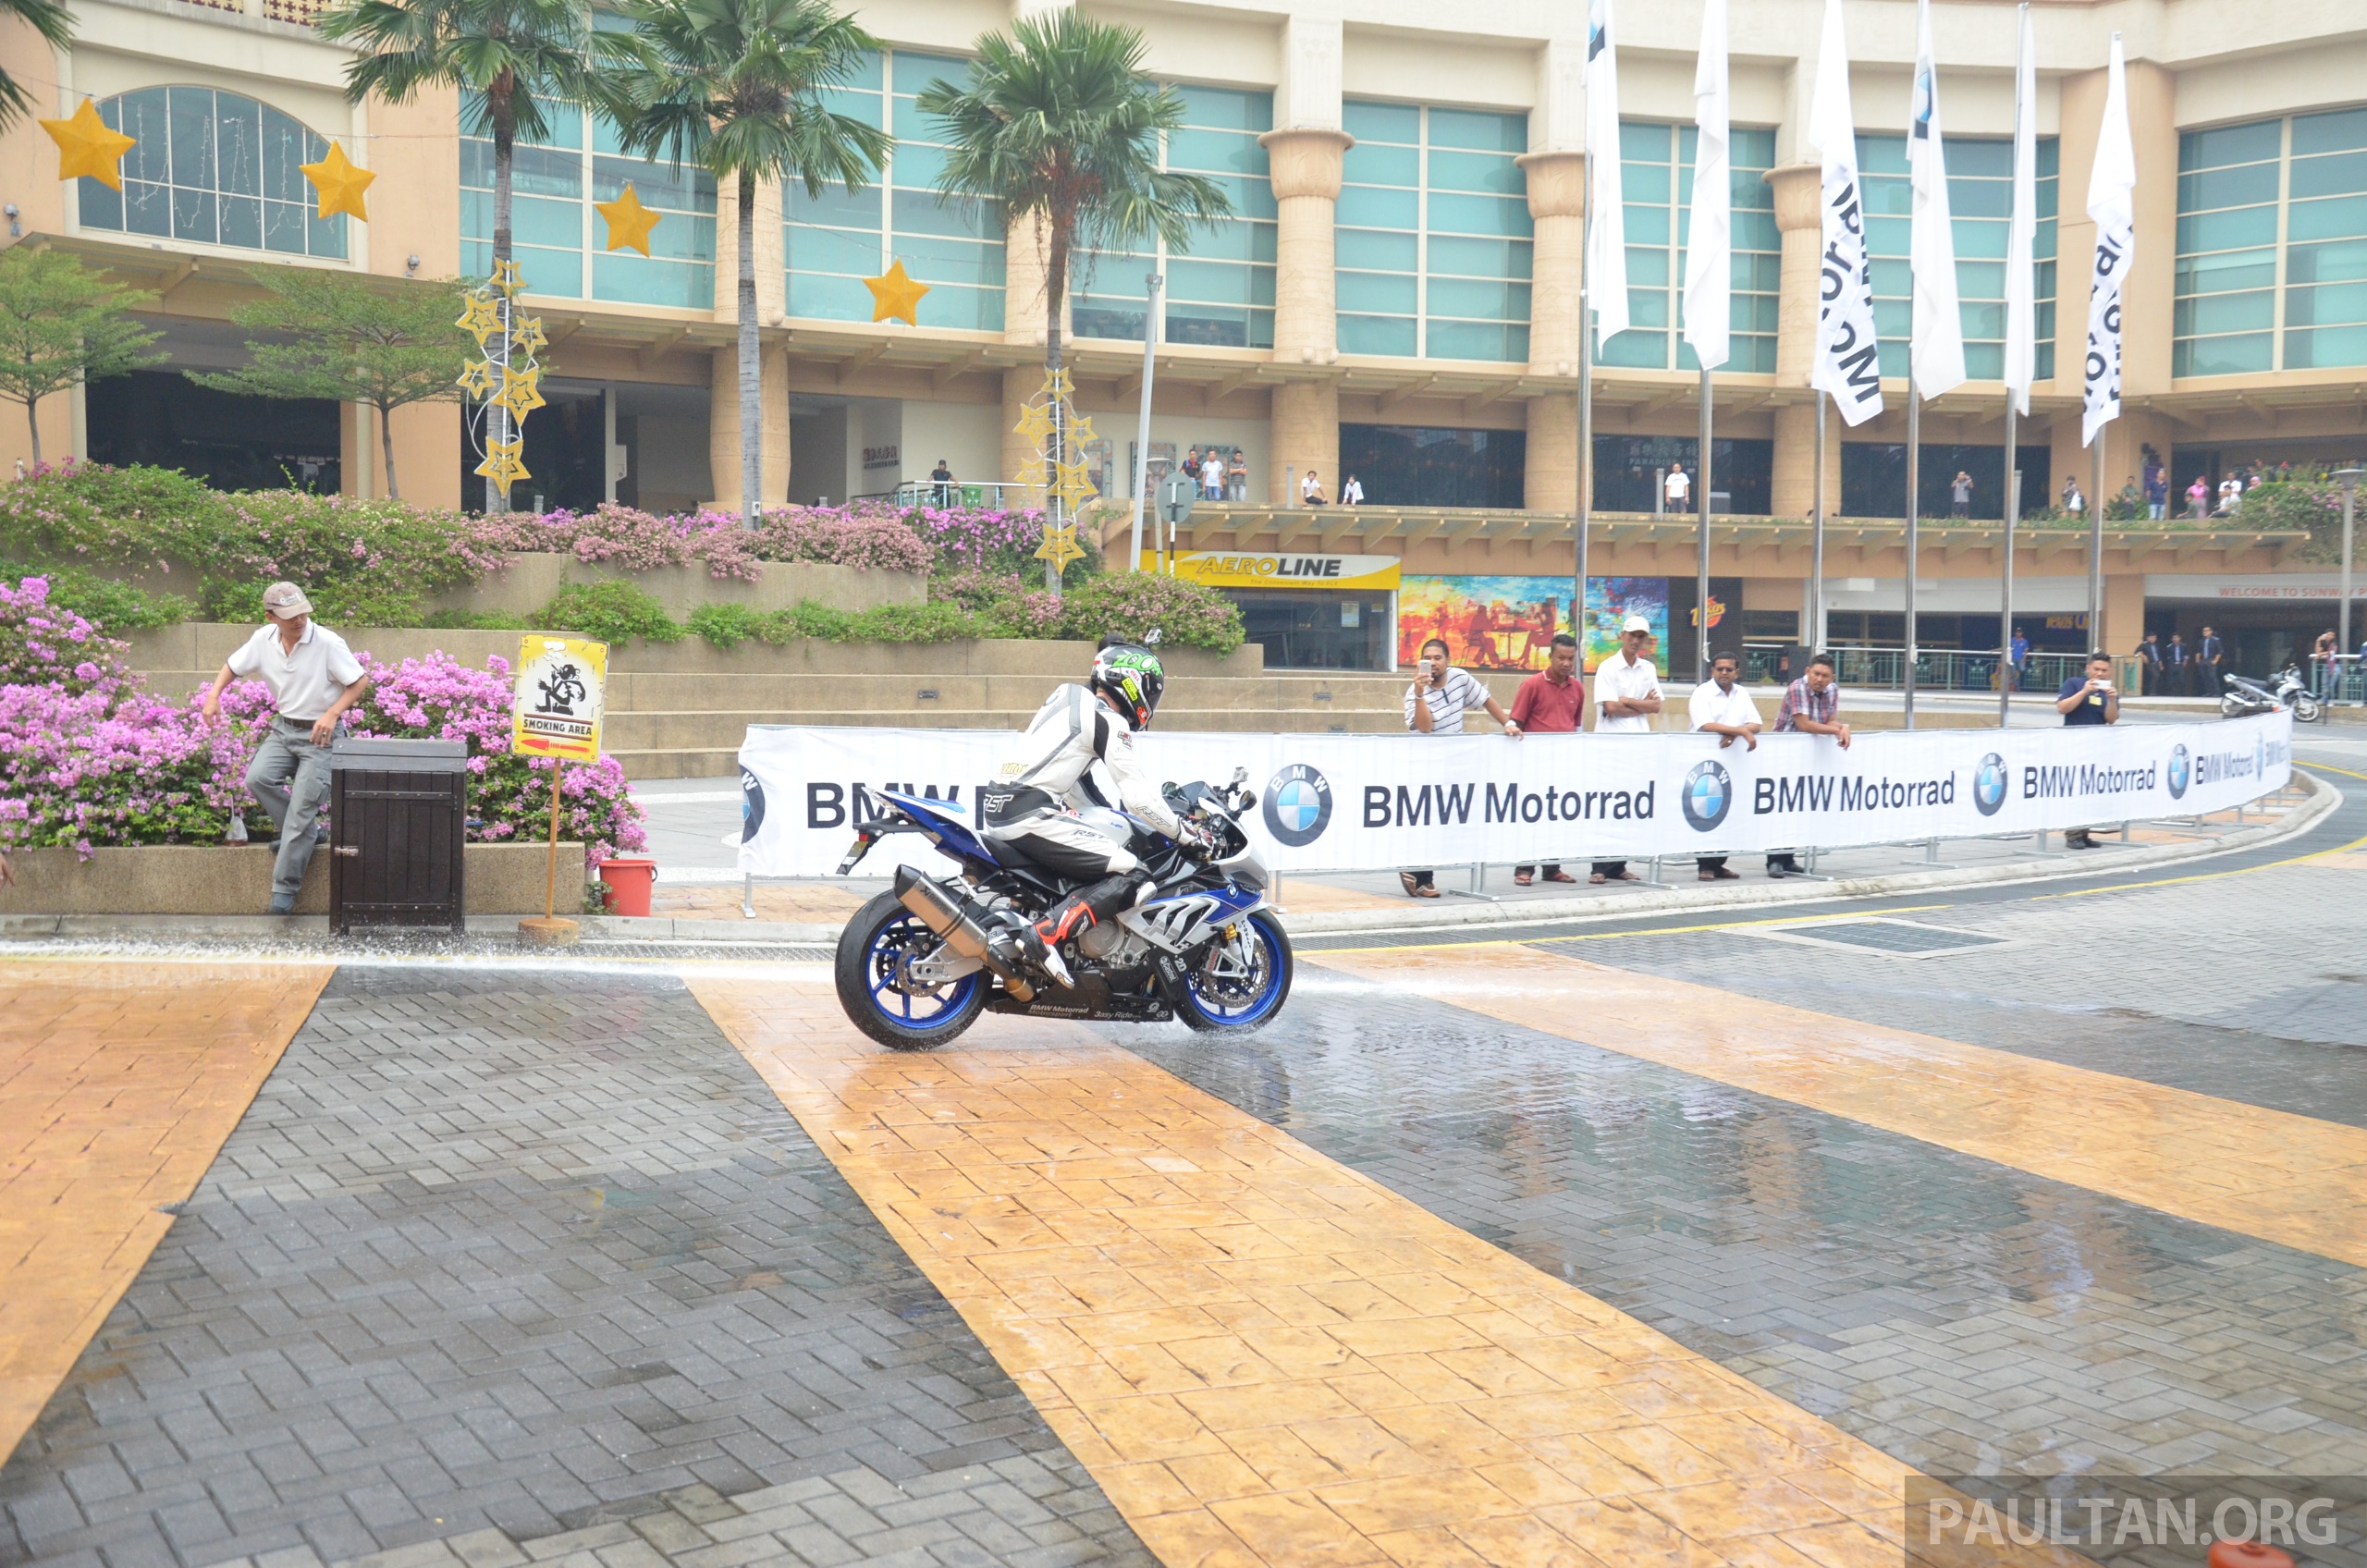 BMW Active Safety Showcase – highlighting the BMW Motorrad bike range